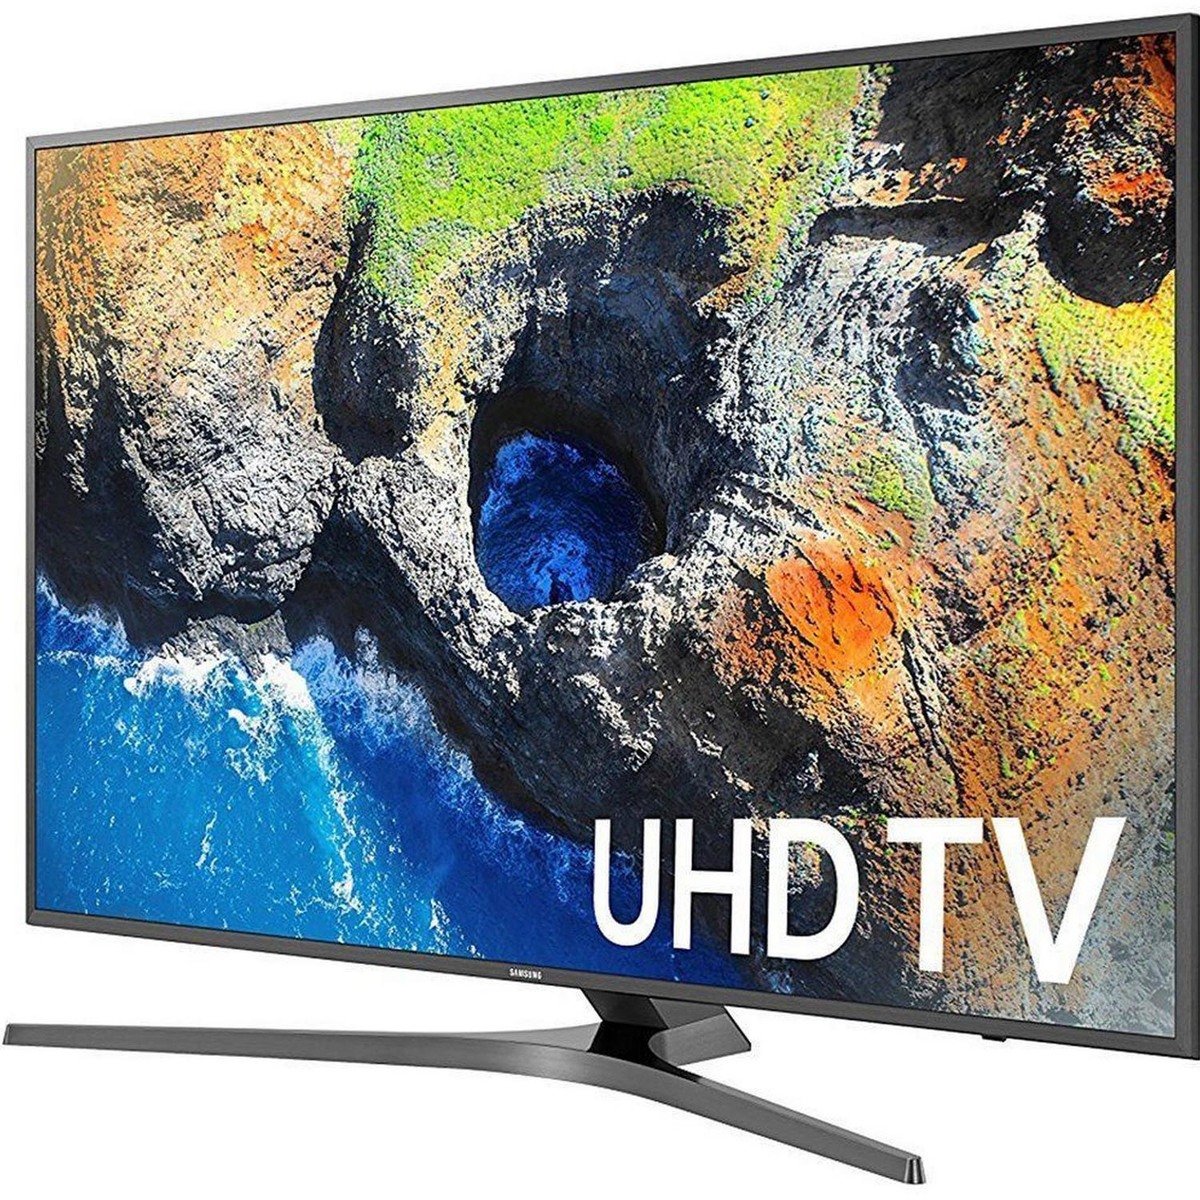 Samsung Ultra HD Smart LED TV UA50MU7000 50inch